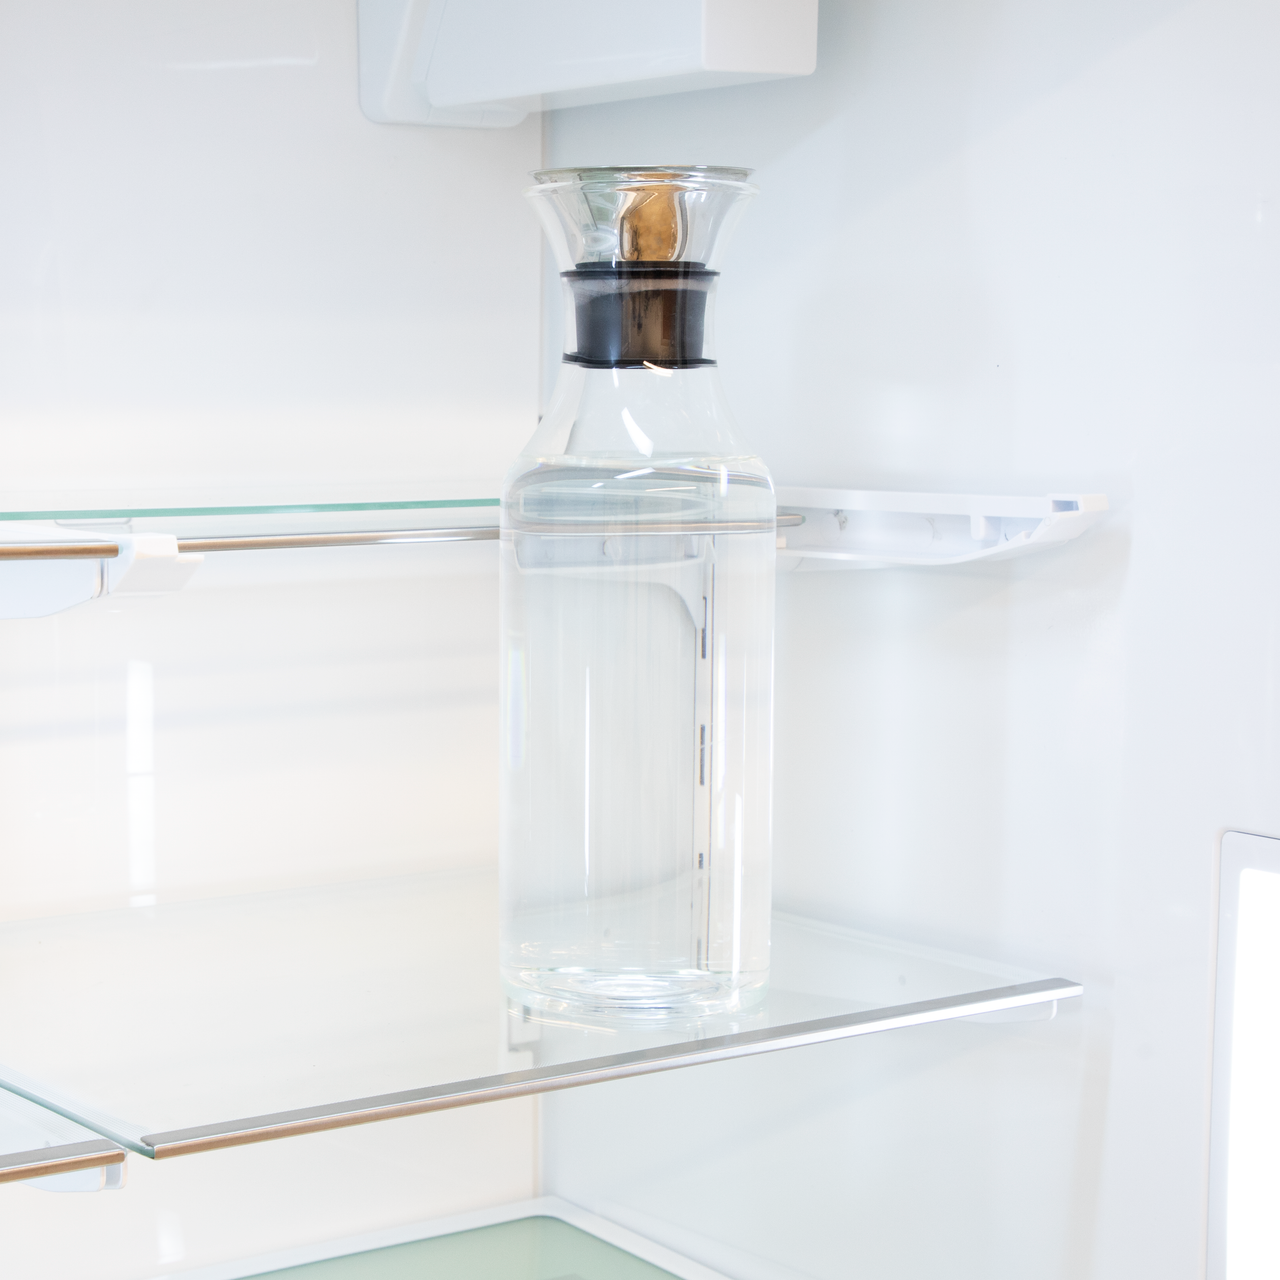 Sharp French 4-Door Counter-Depth Refrigerator with Water Dispenser (SJG2254FS) – interior view of slide-in shelf with water bottle